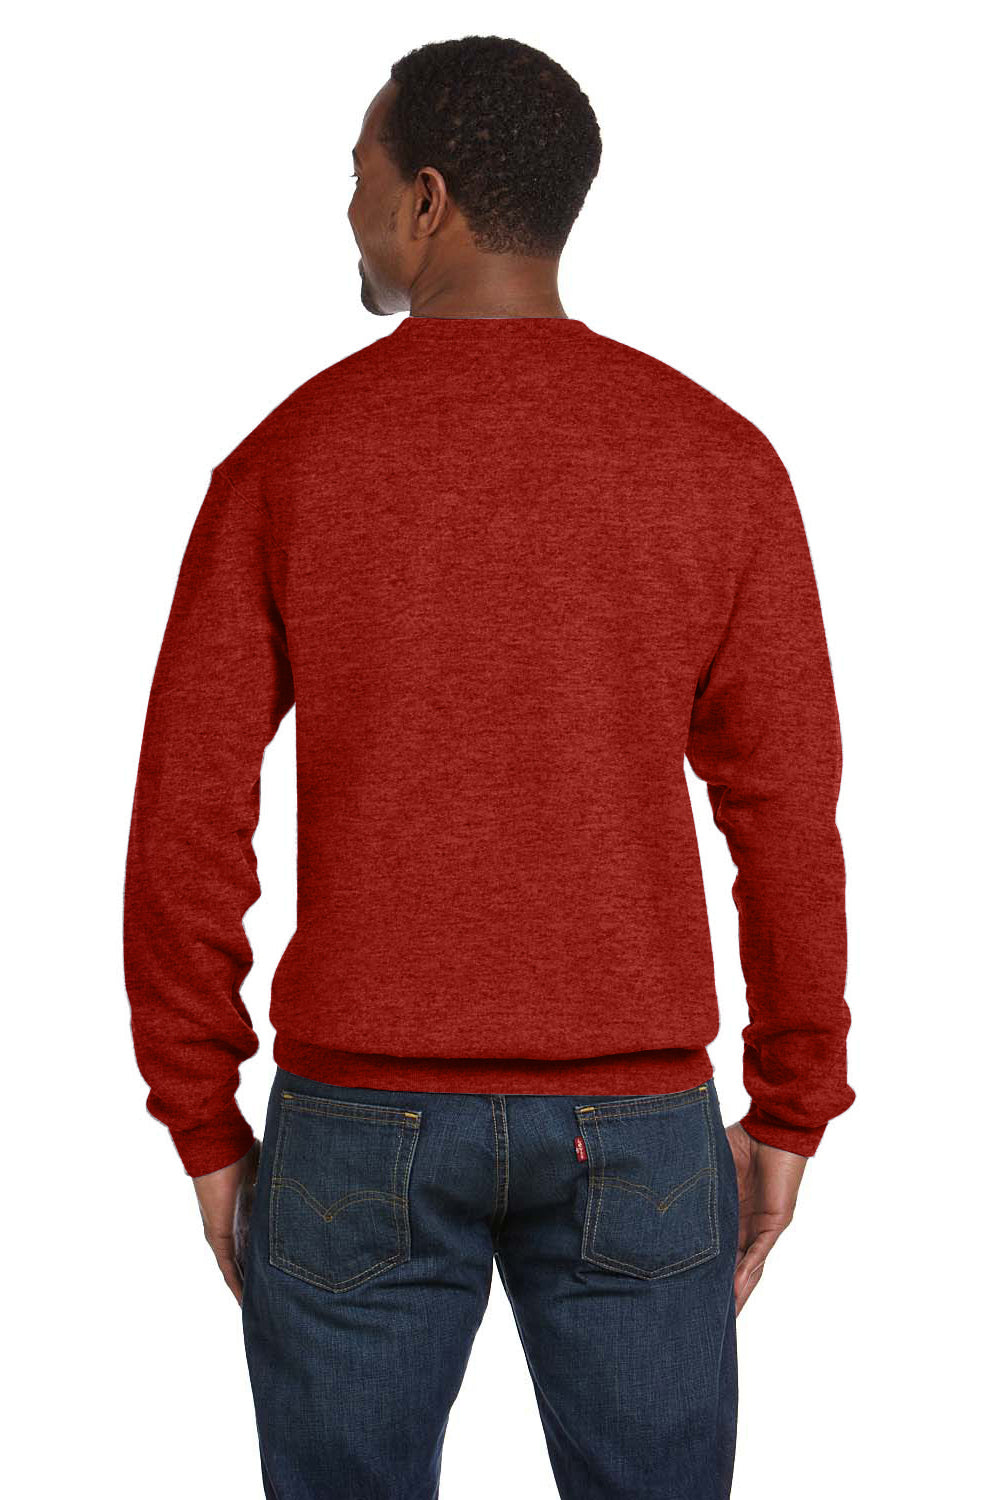 Hanes P160 EcoSmart Print Pro XP Fleece Crewneck Sweatshirt Heather Red Pepper Back